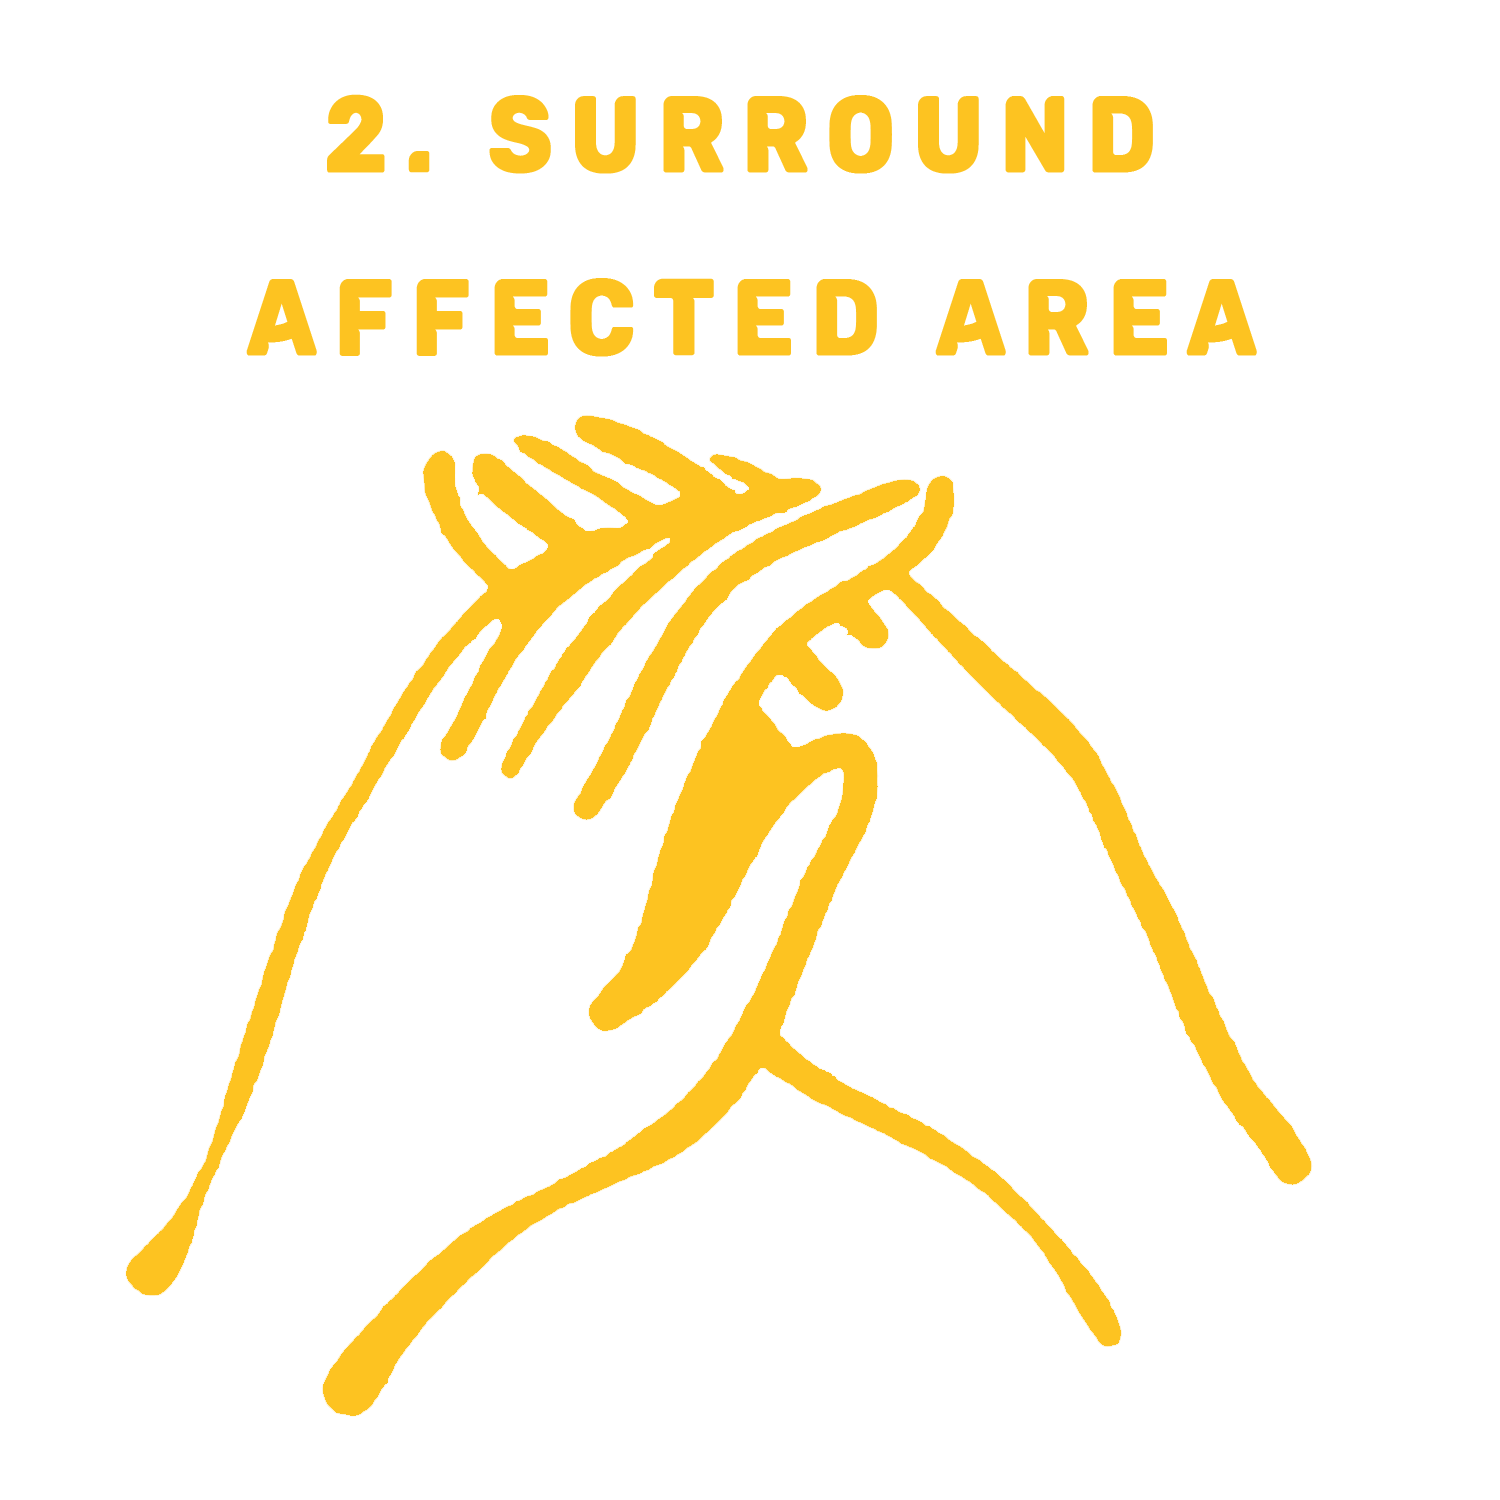 2. Surround affected area - Happy CBD